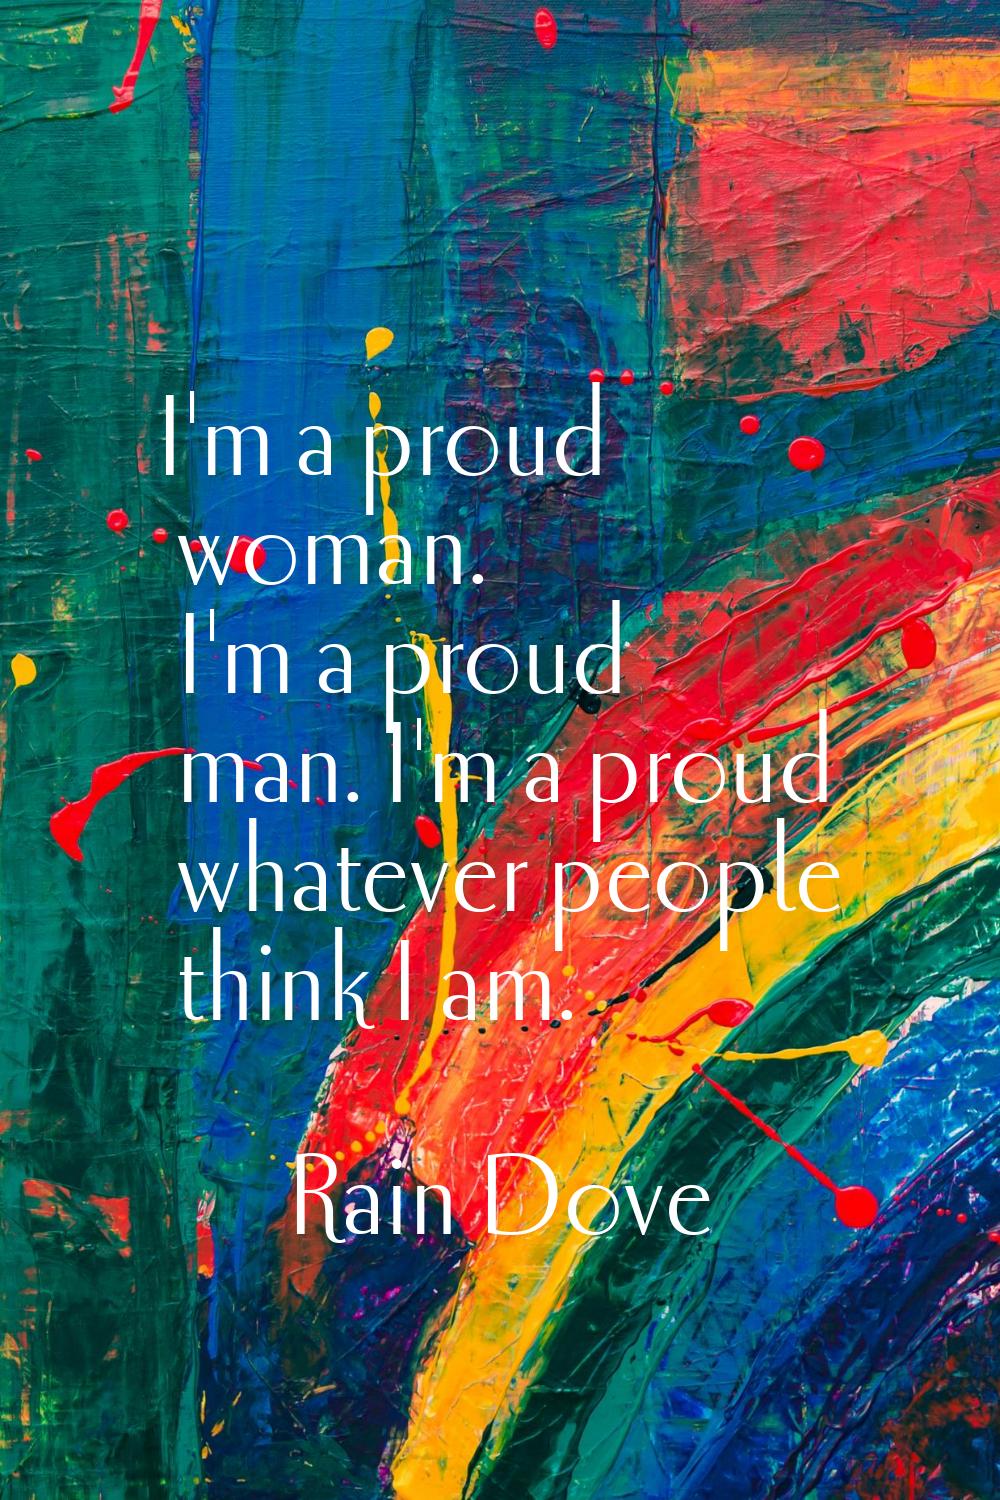 I'm a proud woman. I'm a proud man. I'm a proud whatever people think I am.